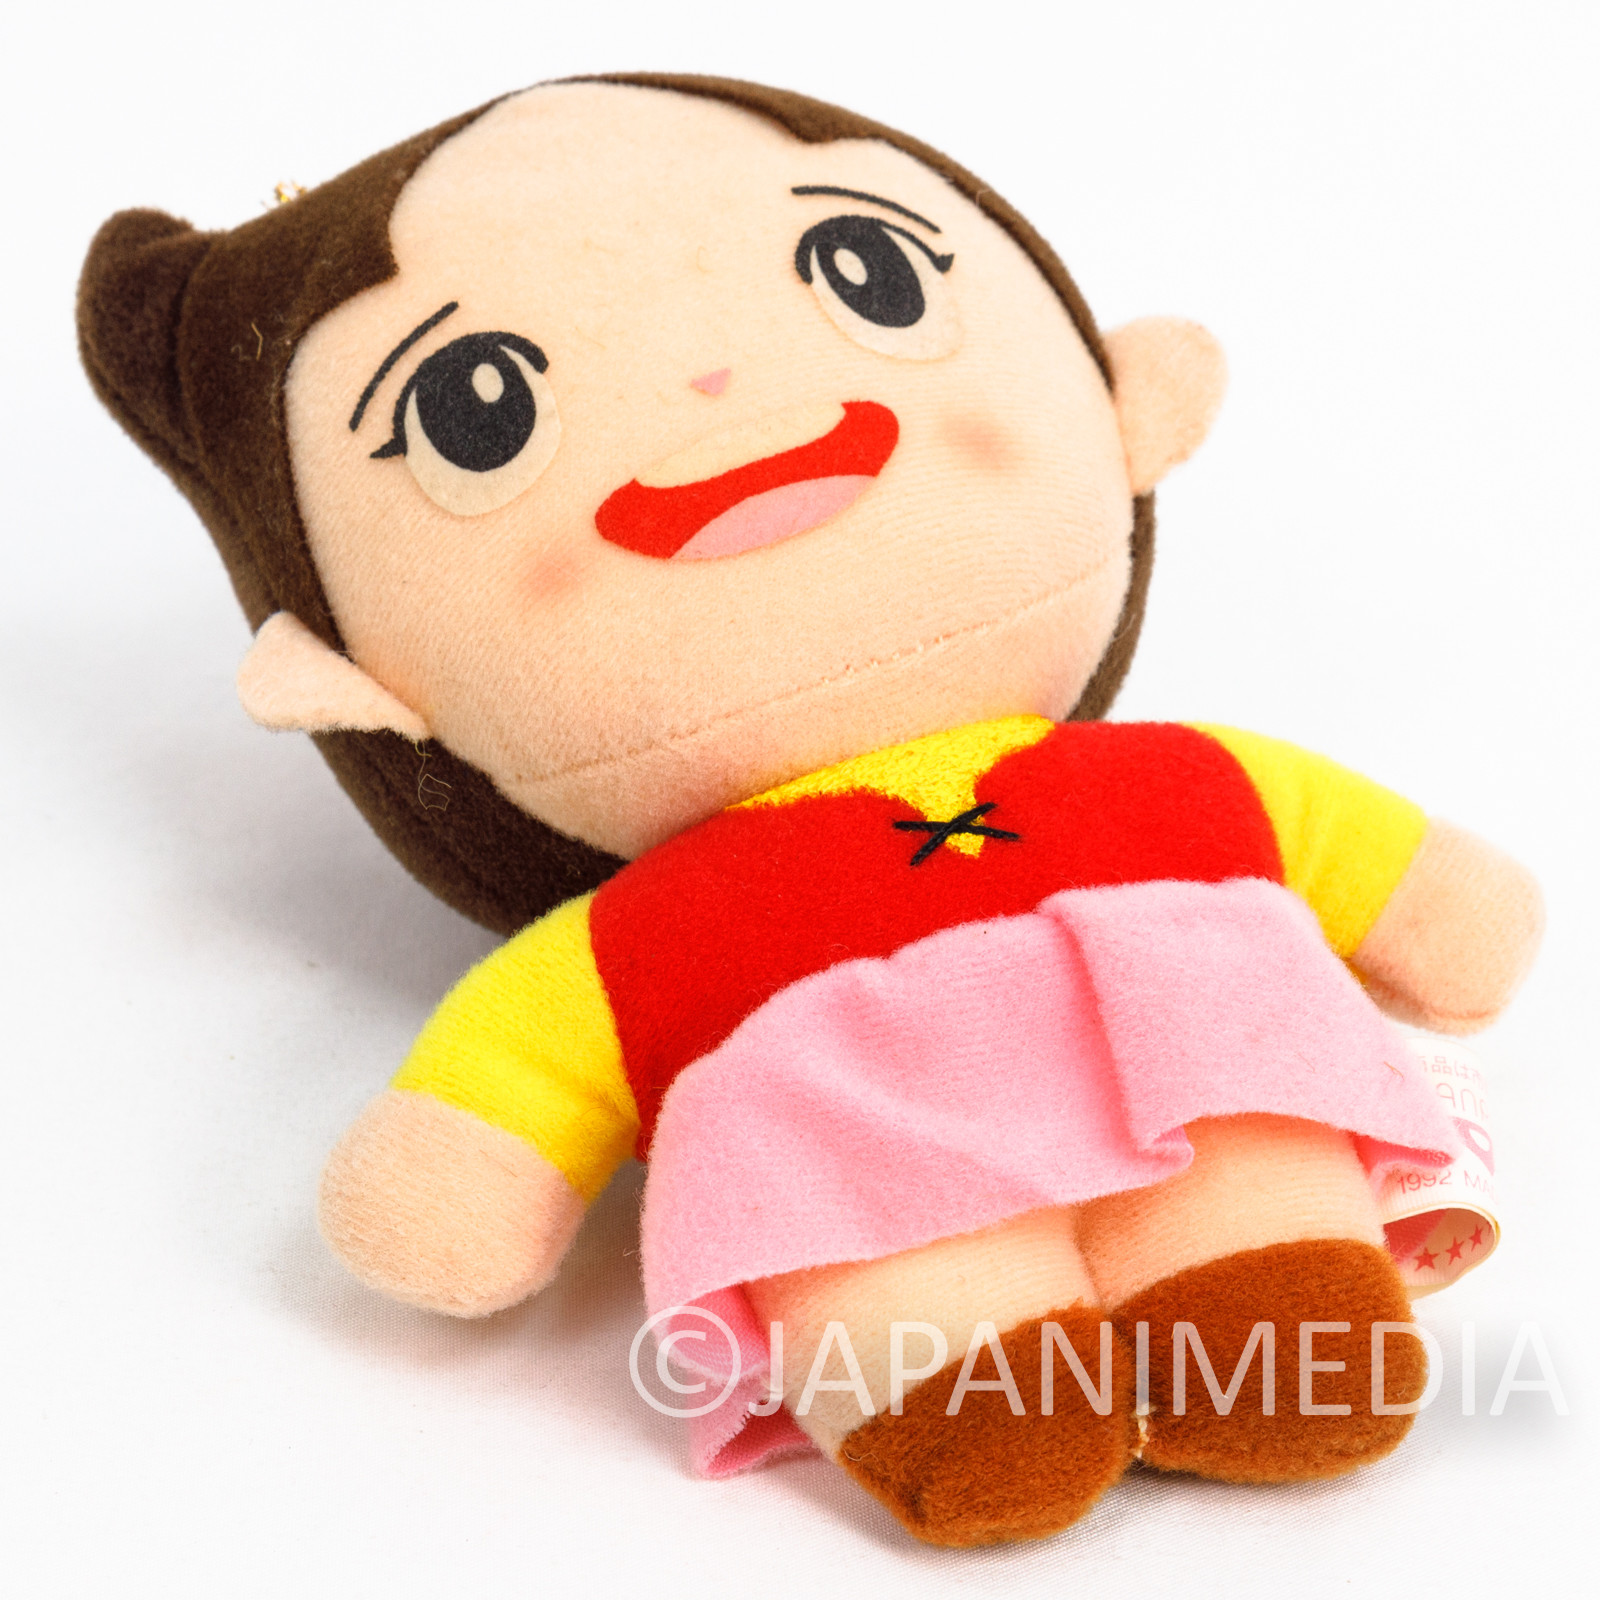 Retro RARE Heidi Girl of the Alps Plush Doll Banpresto JAPAN ANIME